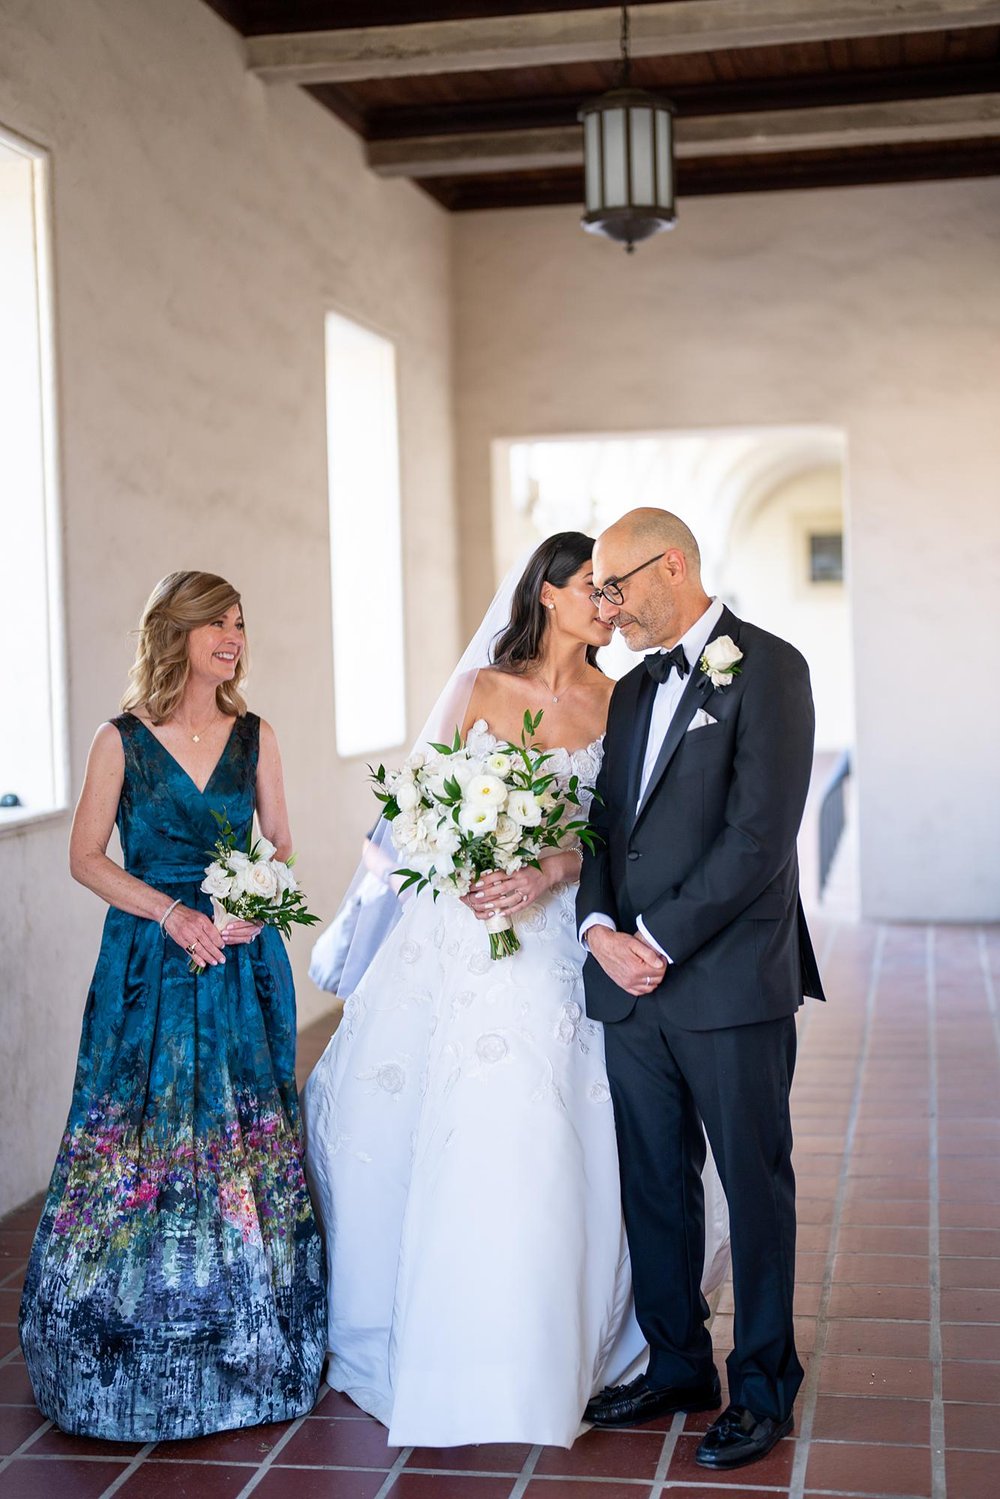 Caltech Athenaeum Wedding | Miki & Sonja Photography | mikiandsonja.com